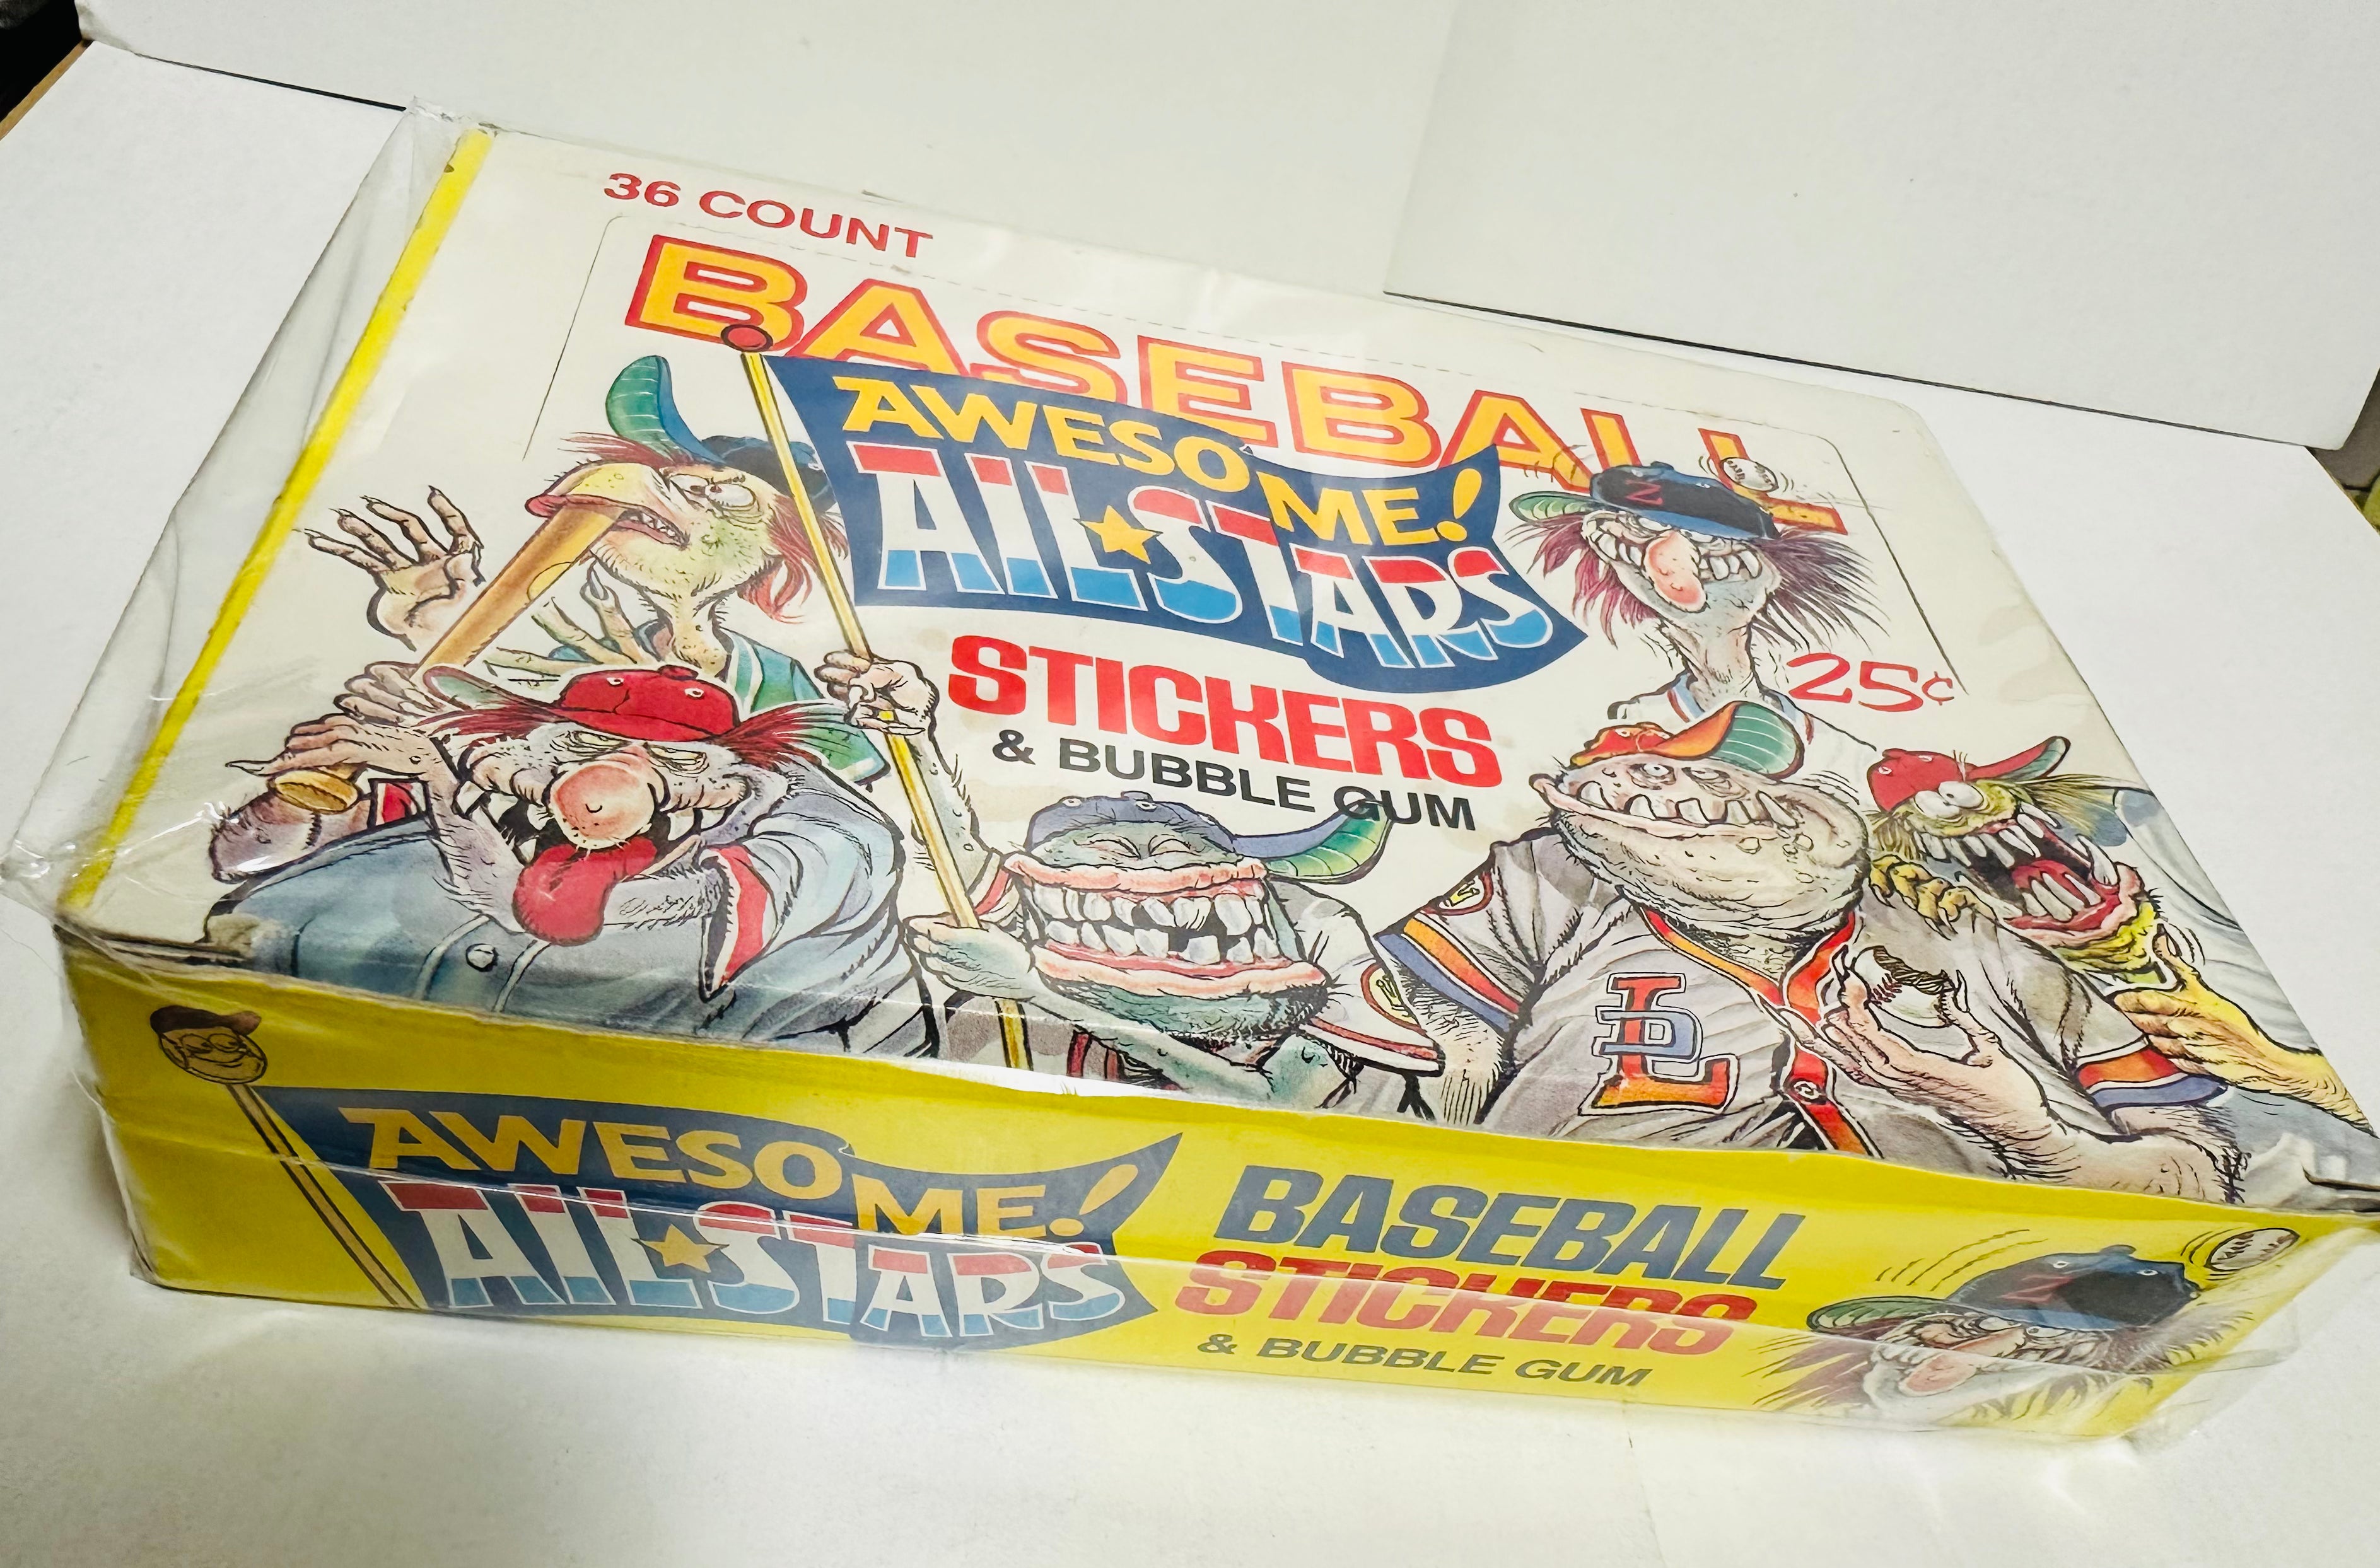 Baseball awesome all-stars cards 36 packs box 1988